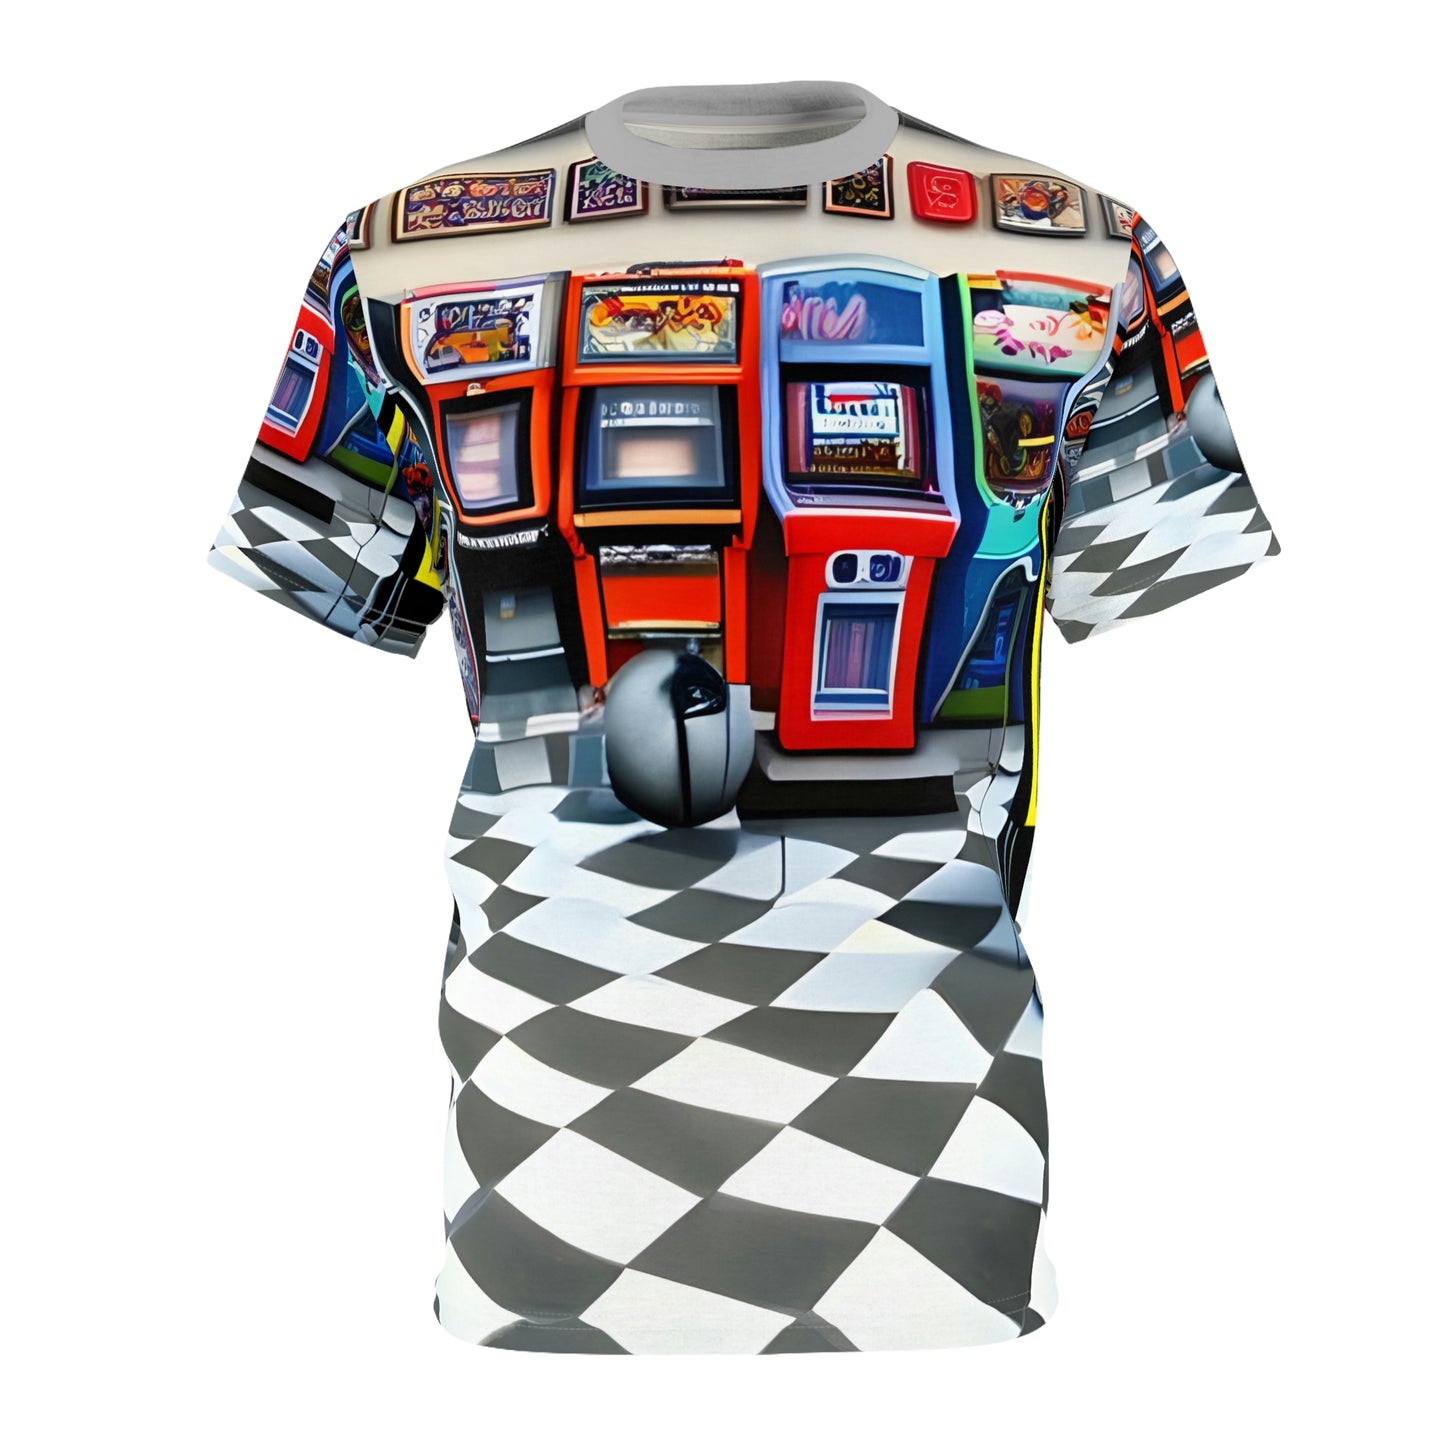 Gamer's Arcade Unisex T-Shirt